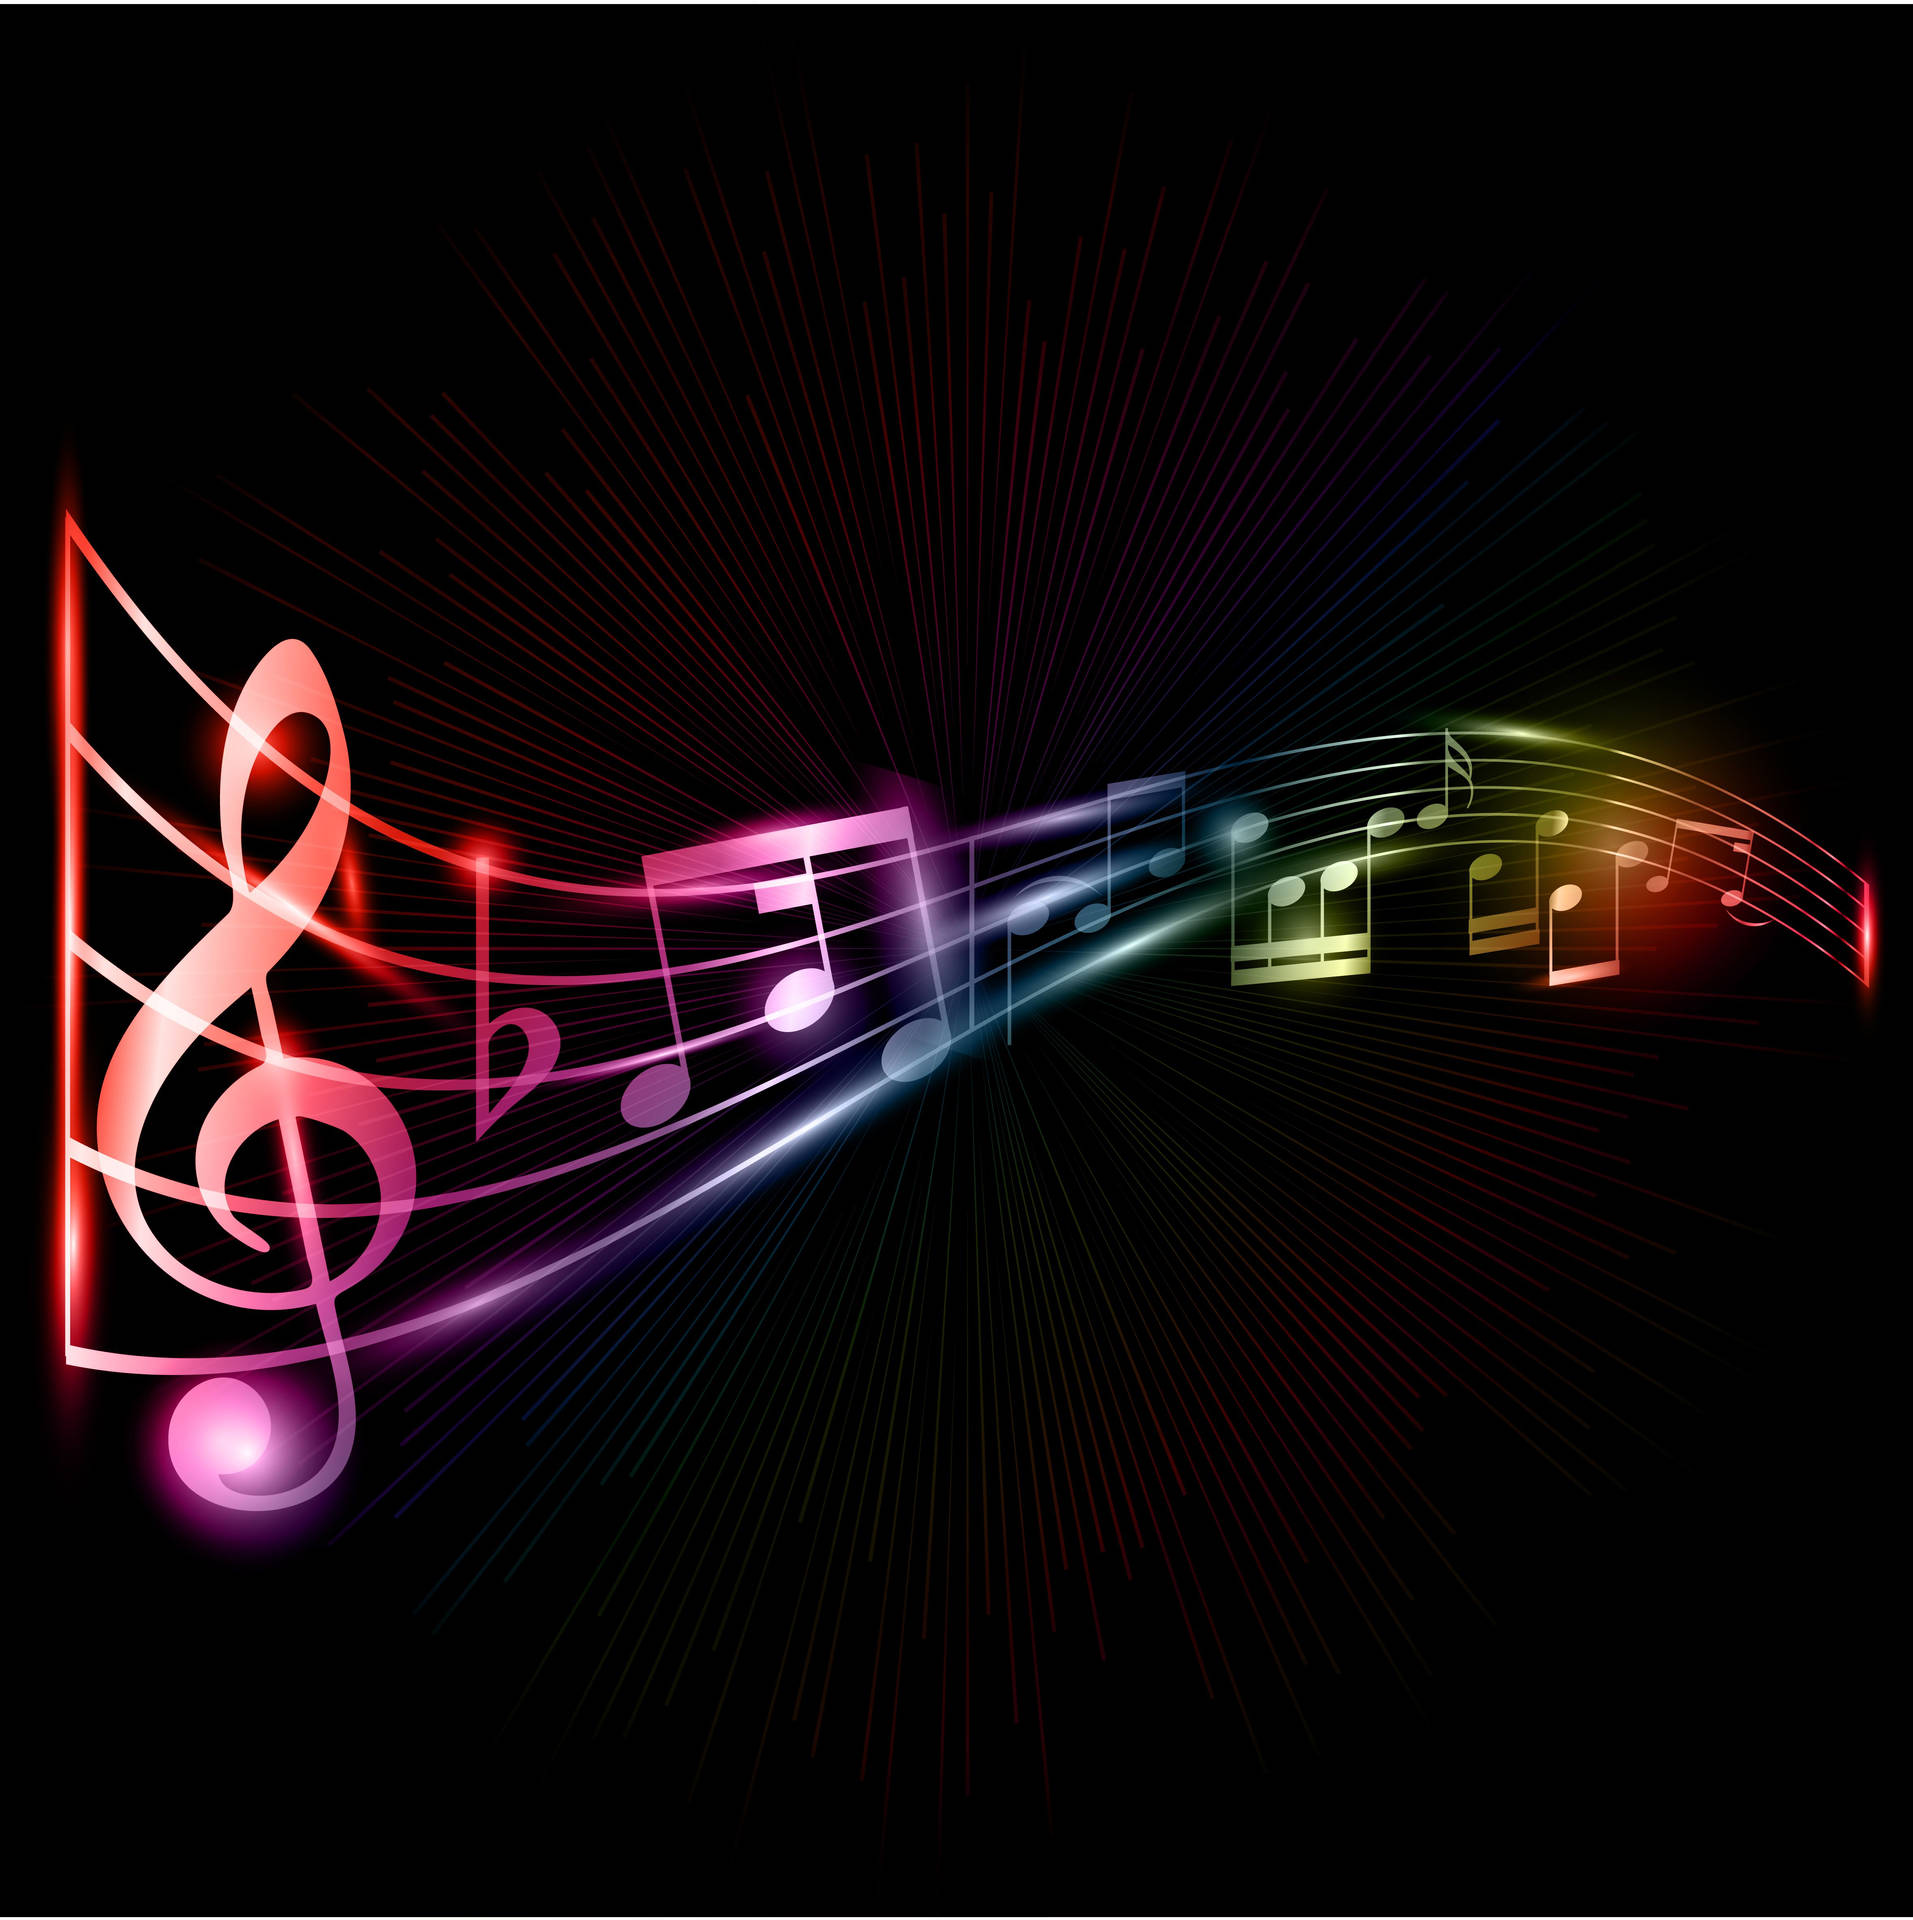 Music Symbols On Music Sheet Wallpaper